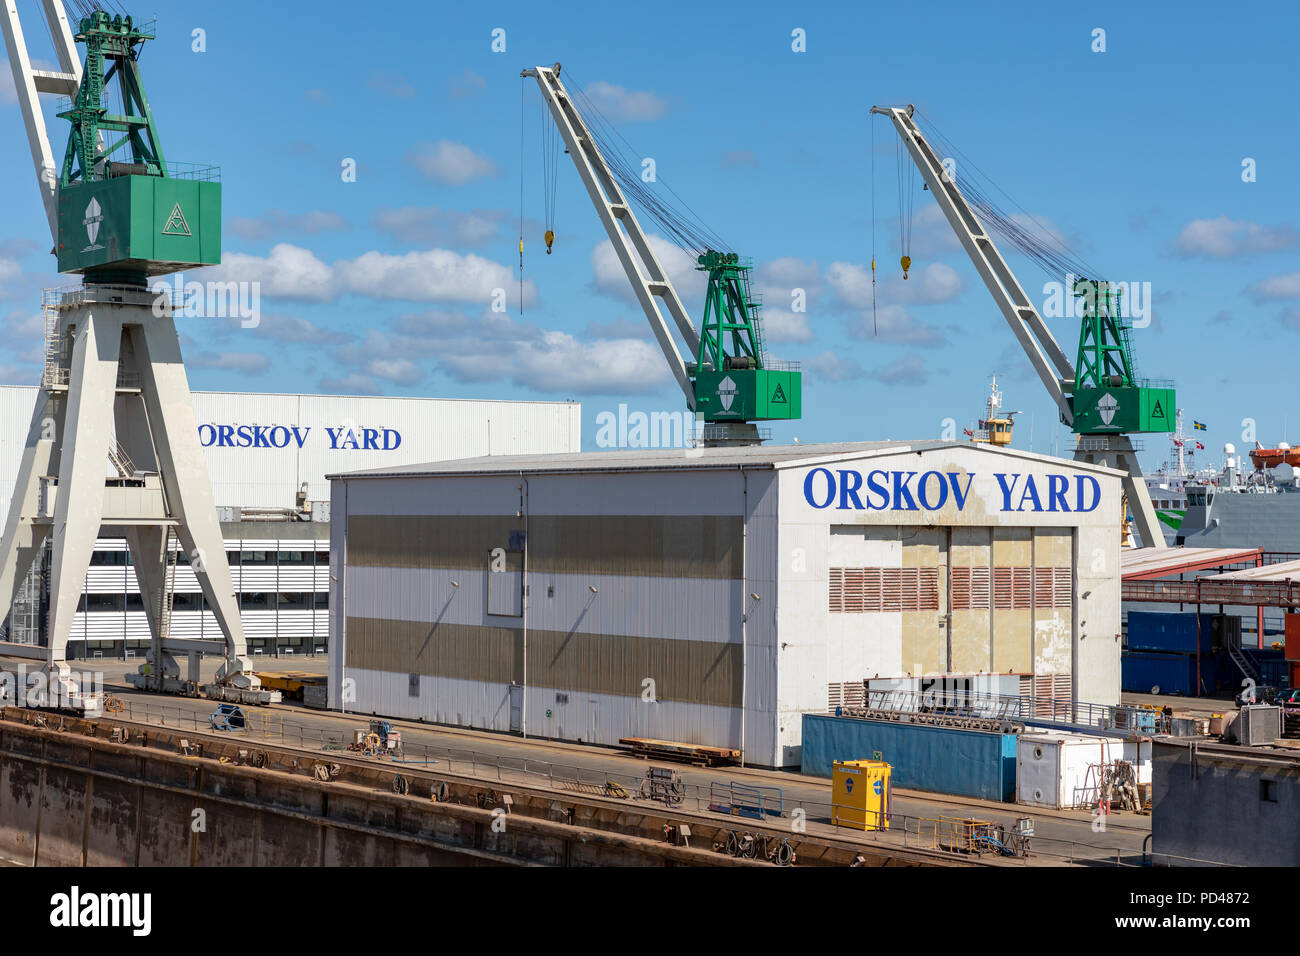 Orskov Yard, Frederikshavn, Denmark Stock Photo - Alamy